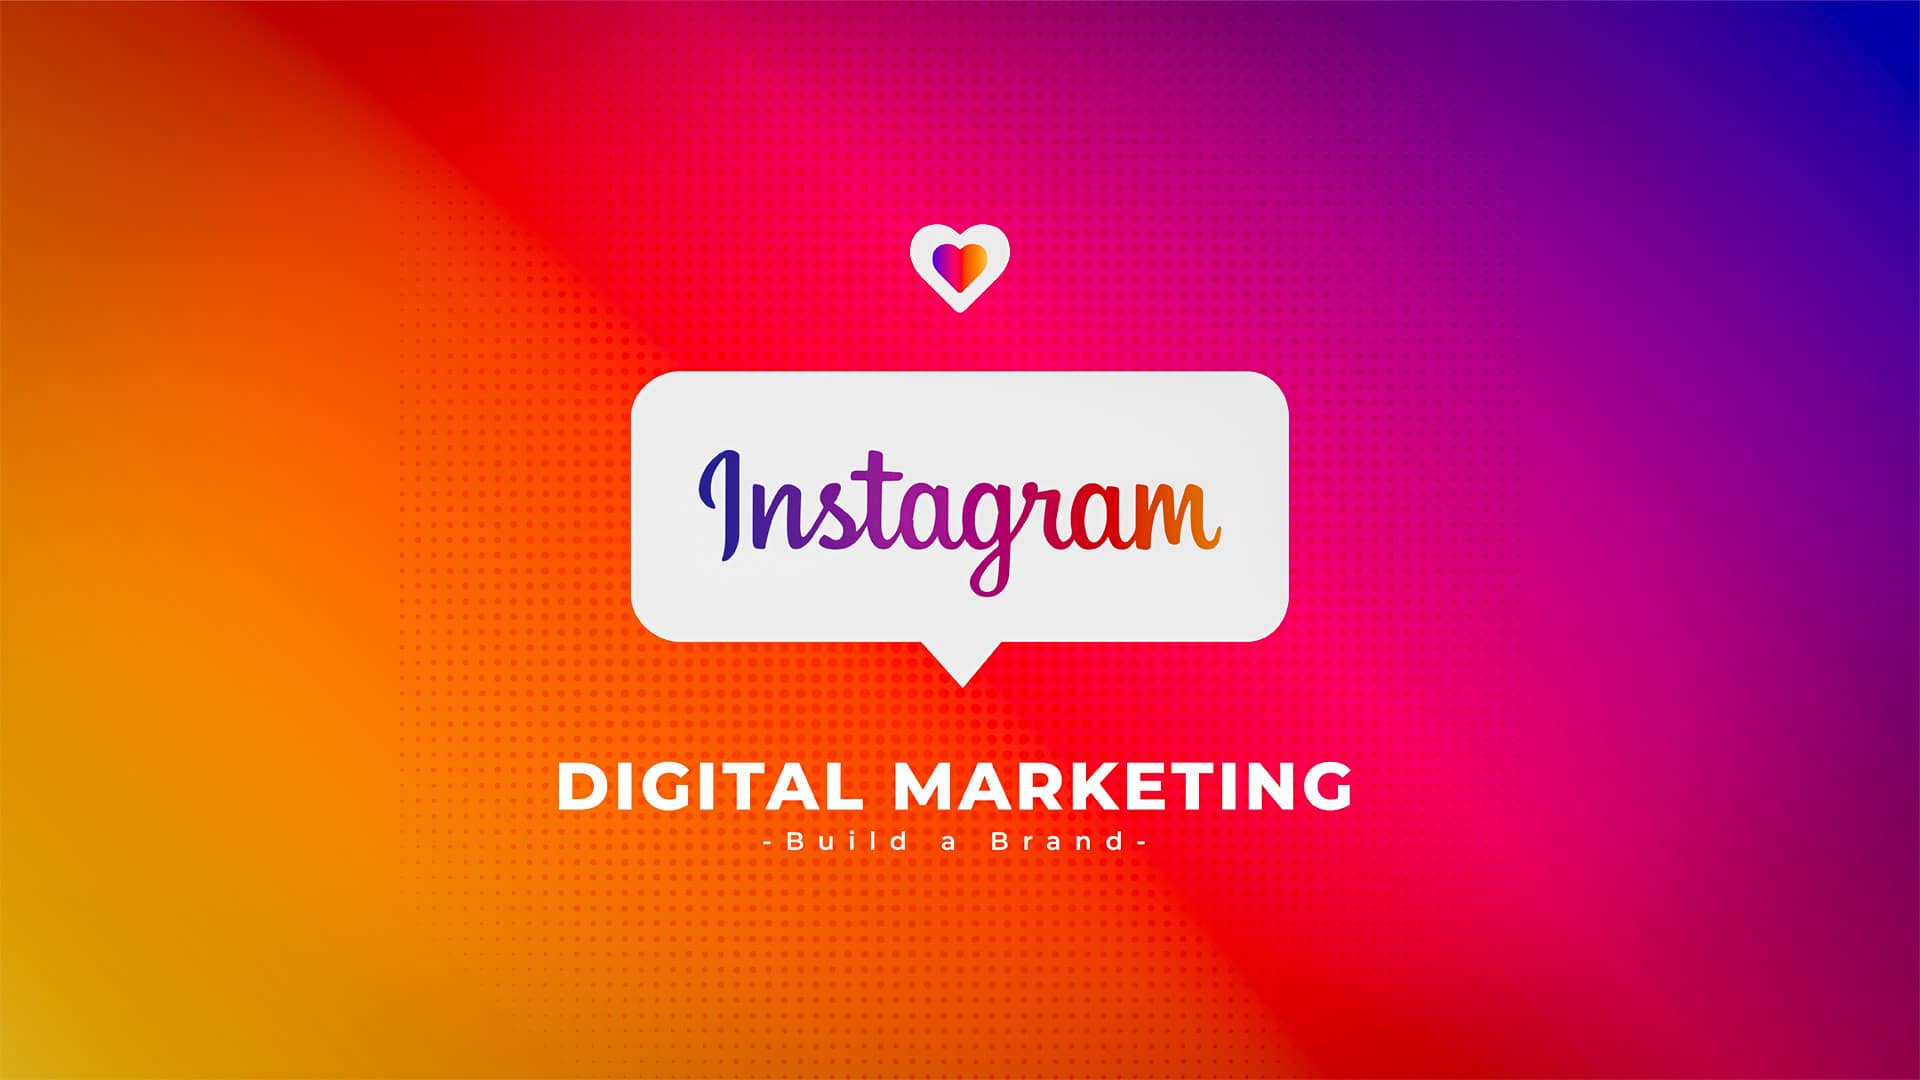 Instagram marketing and digital marketing